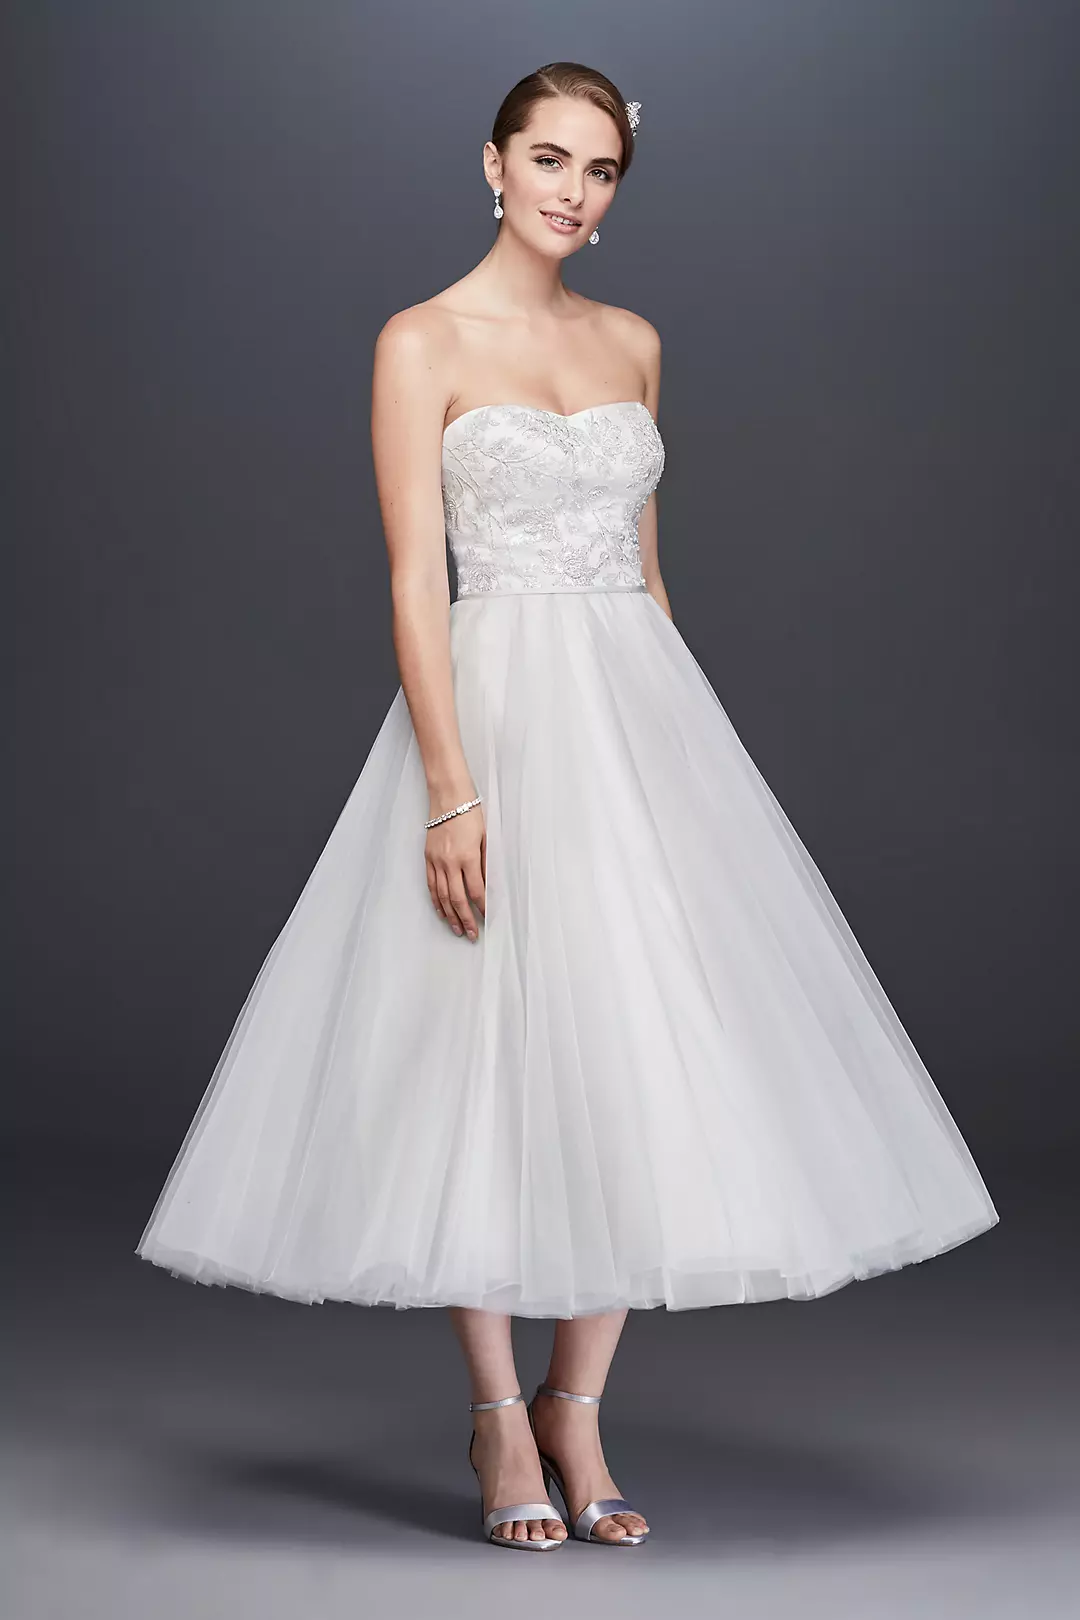 Lace Appliqued Tulle Tea-Length Wedding Dress Image